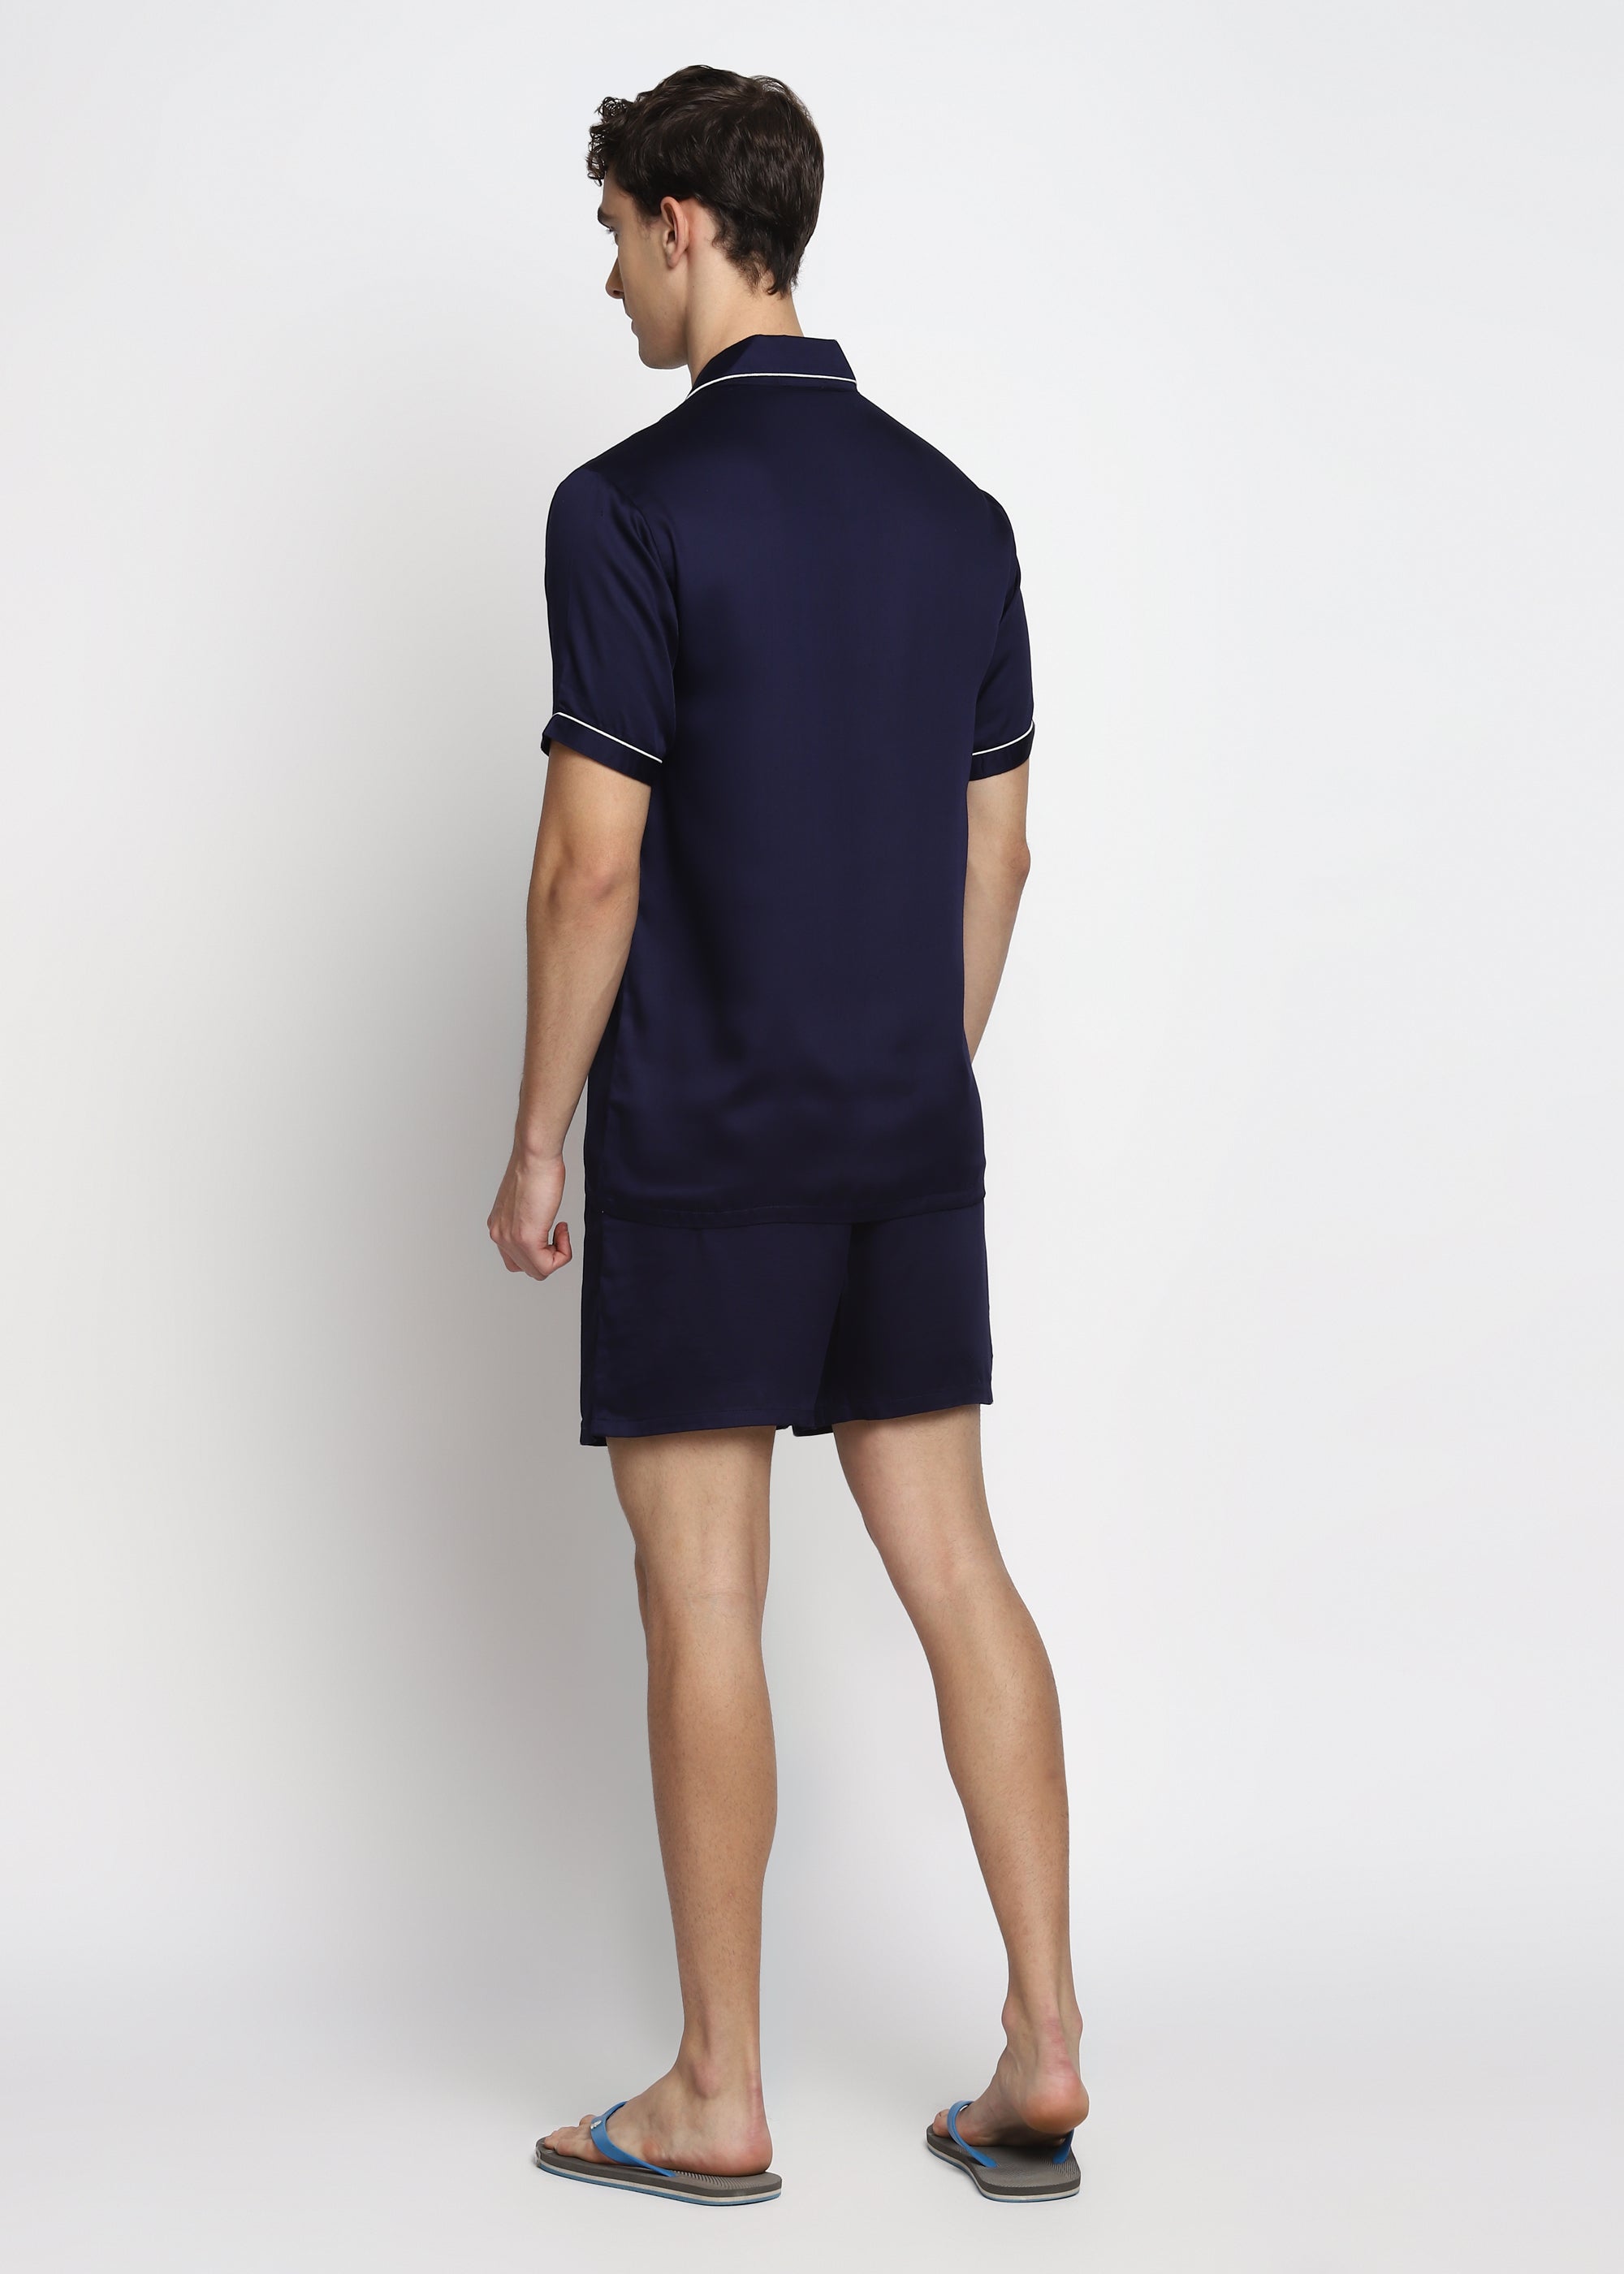 Ultra Soft Navy Modal Satin Short Sleeve Men's Shorts Set - Shopbloom